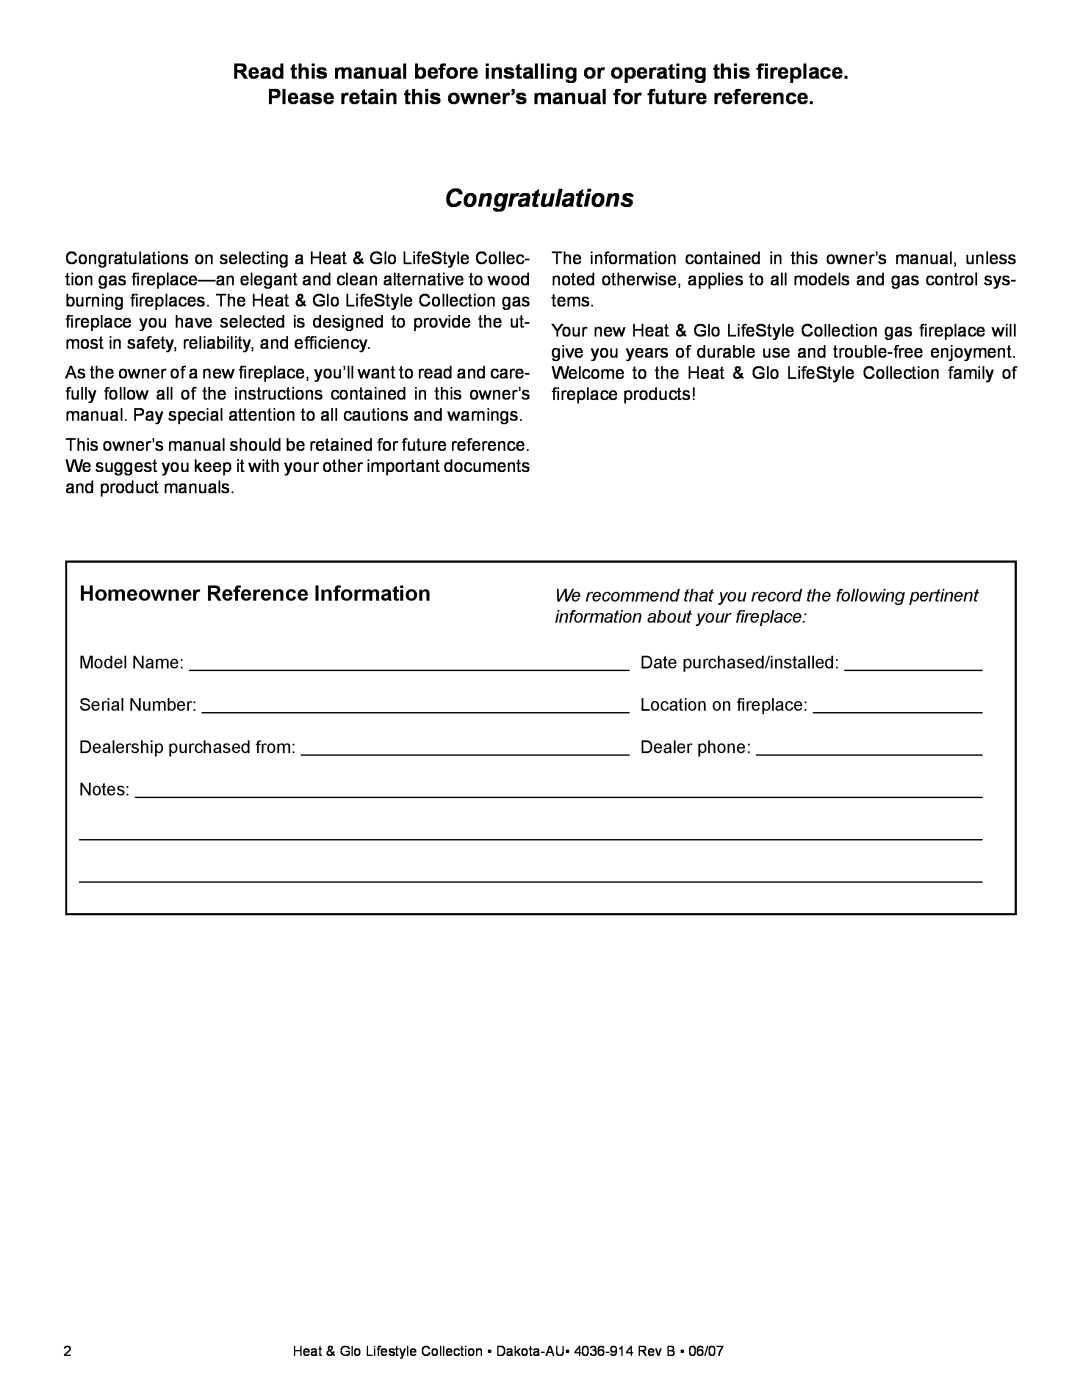 Heat & Glo LifeStyle DAKOTA-AU manual Congratulations, Homeowner Reference Information 